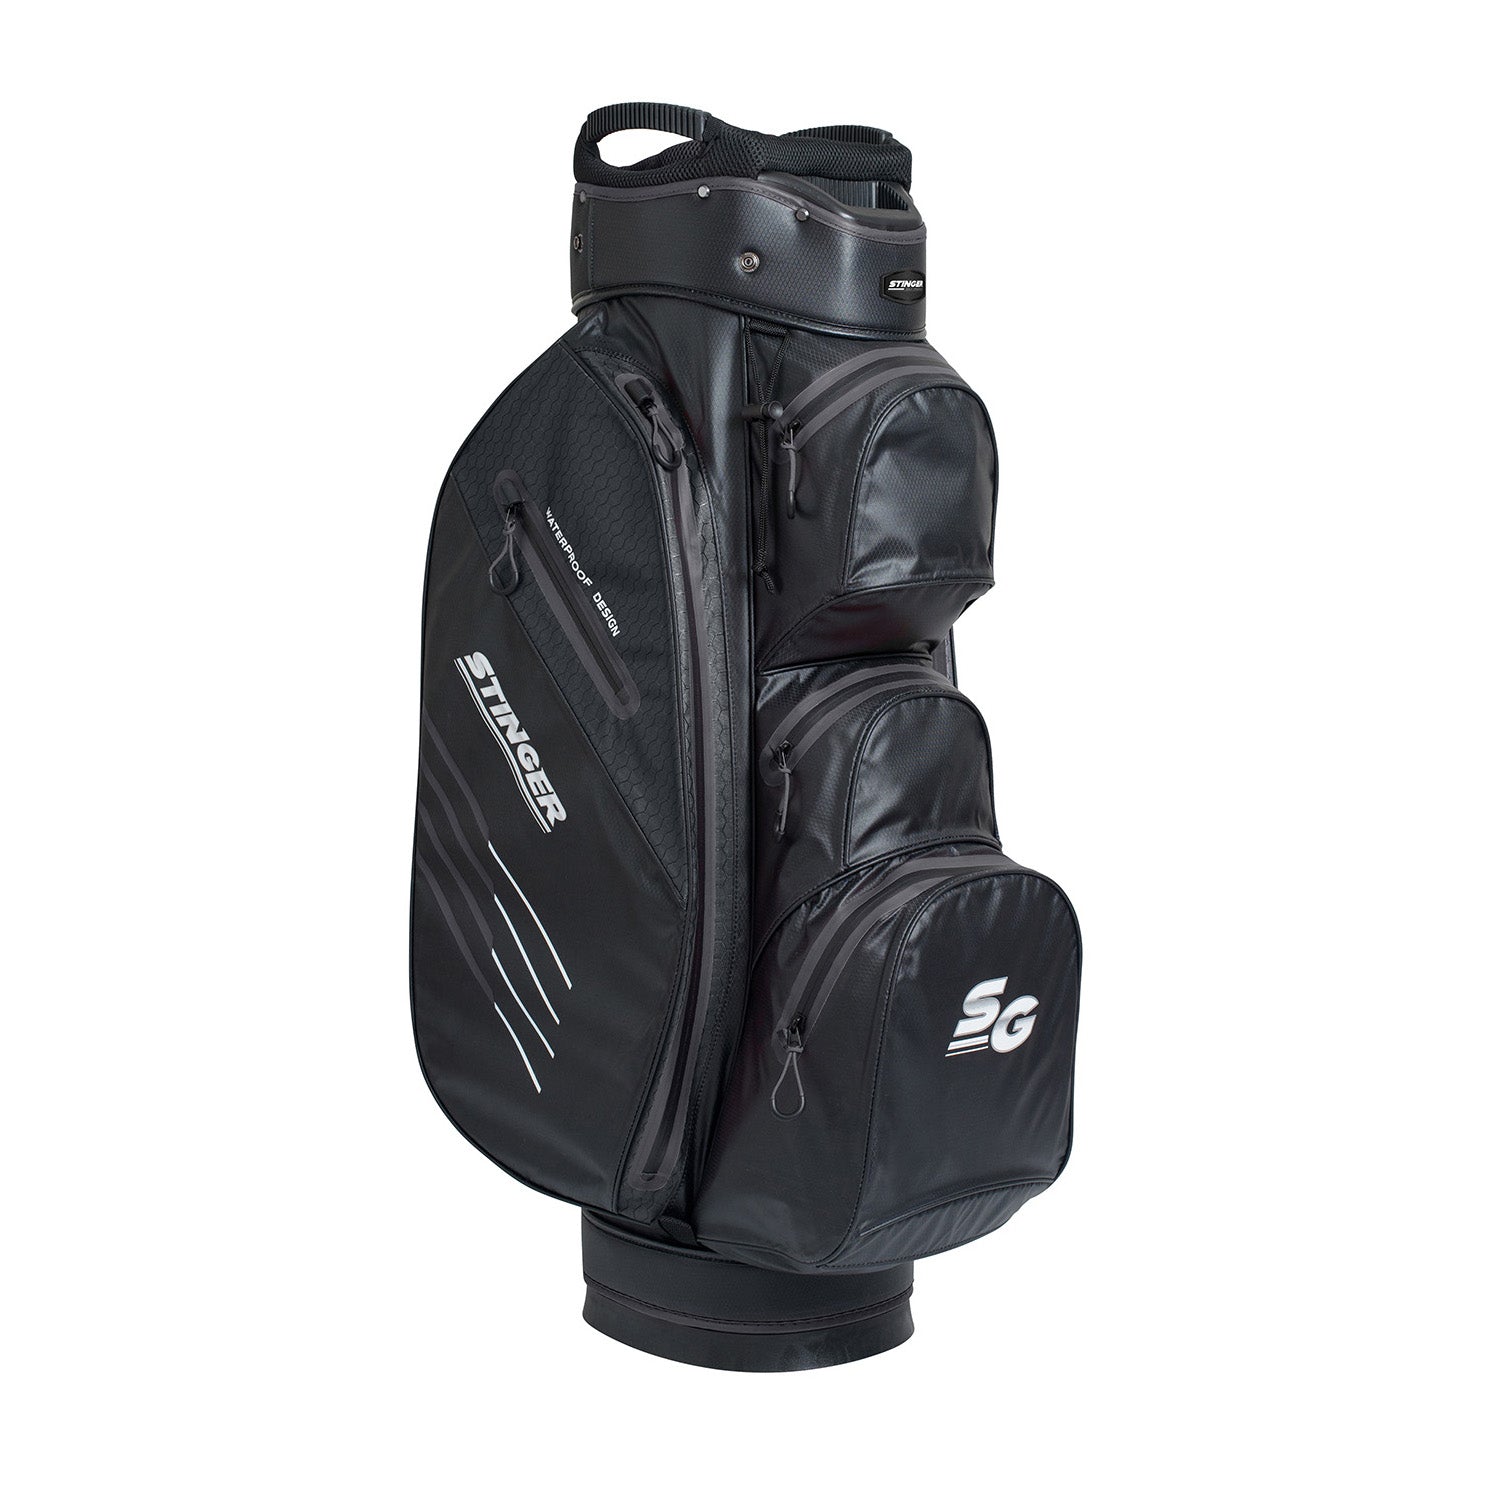 Stinger Waterproof Golf Bag - Black/Grey